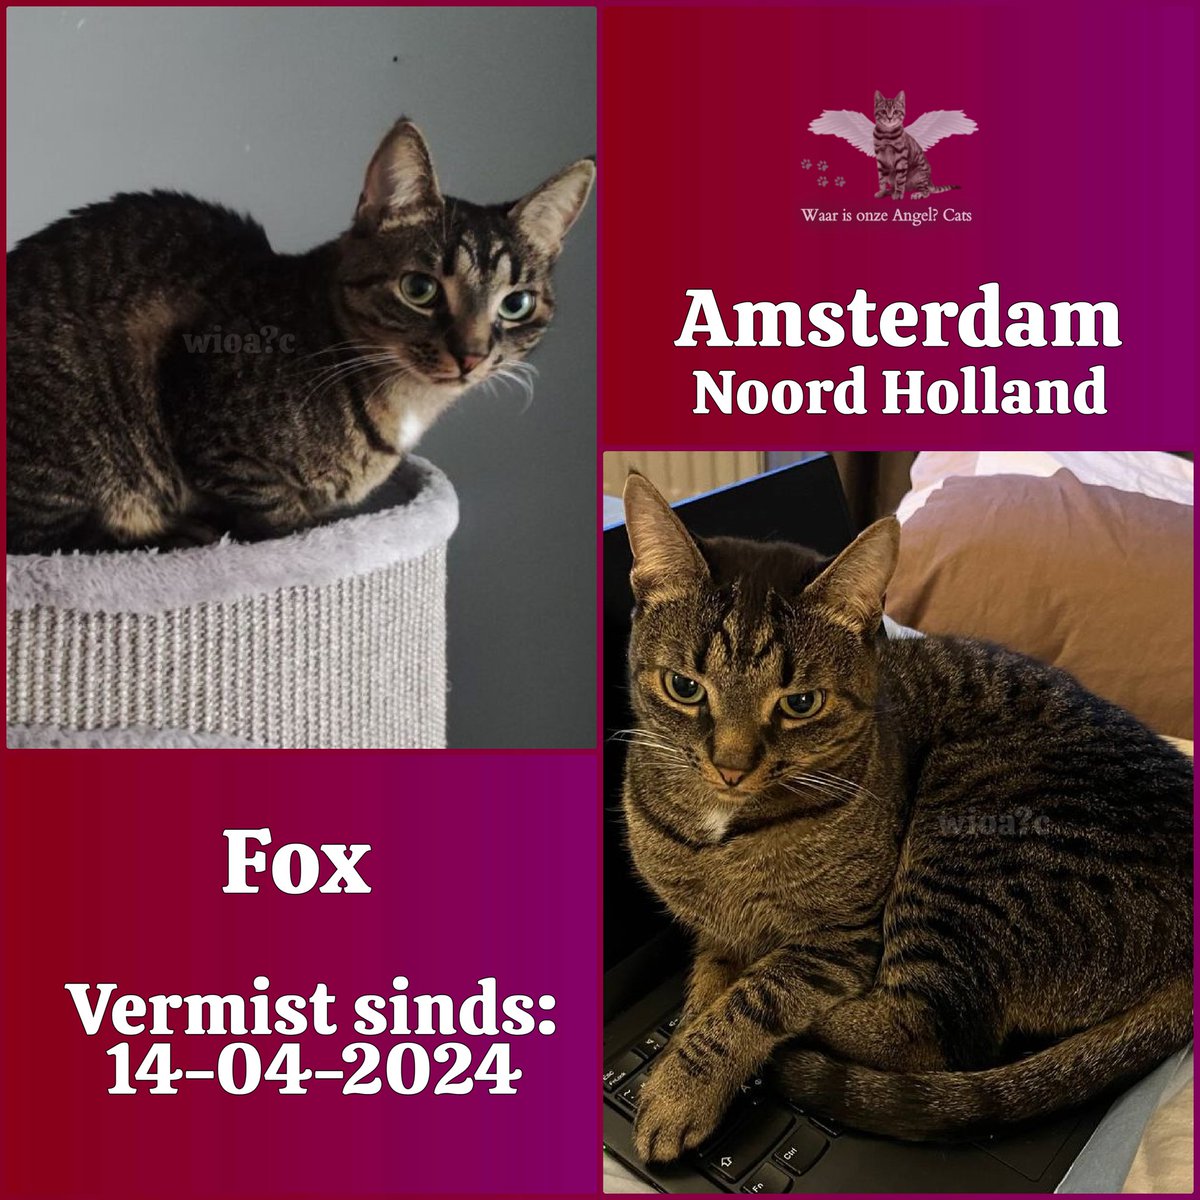 Fox #Vermist sinds 14-04-2024 te #Amsterdam #NoordHolland #Nederland 

facebook.com/photo?fbid=726…